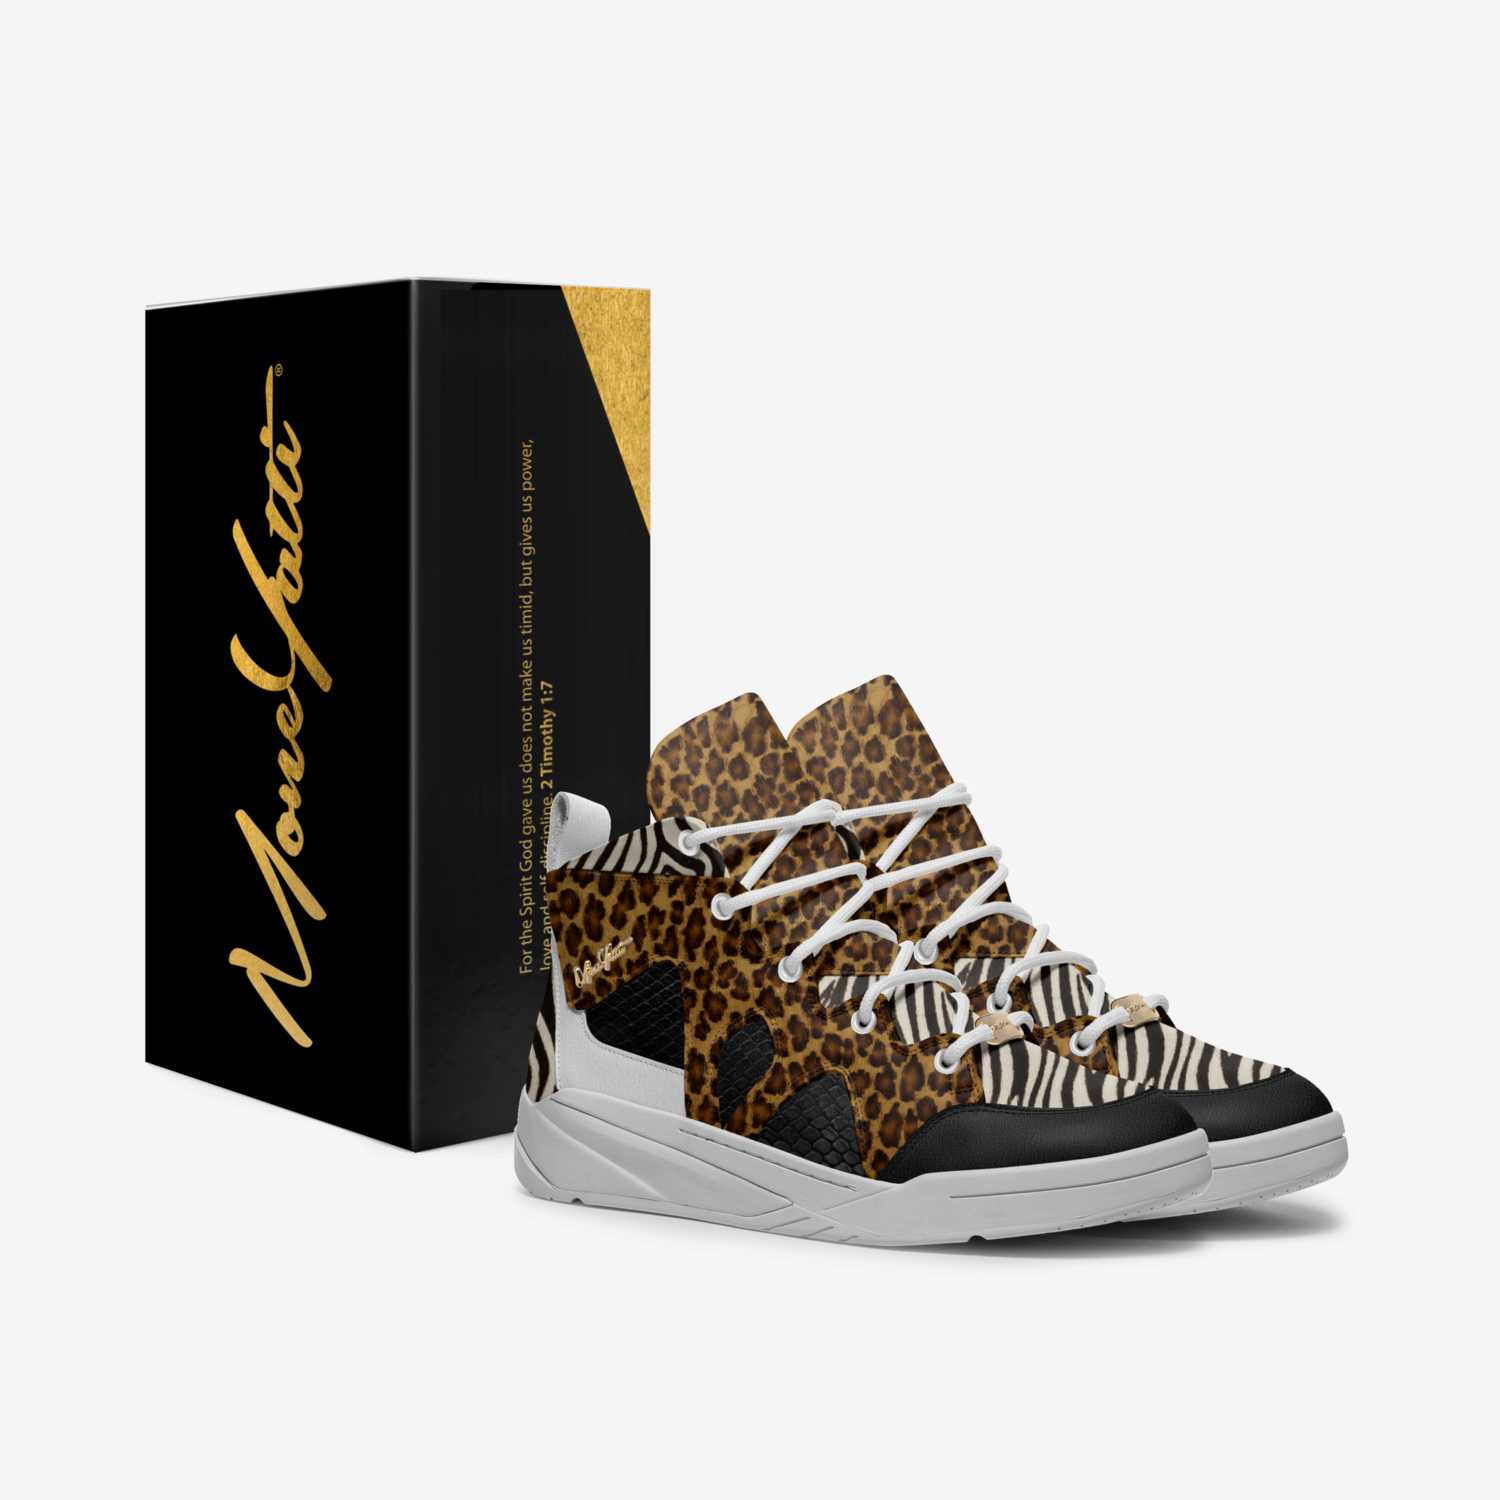 MONEYATTI TAKEOFF 005 custom made in Italy shoes by Moneyatti Brand | Box view